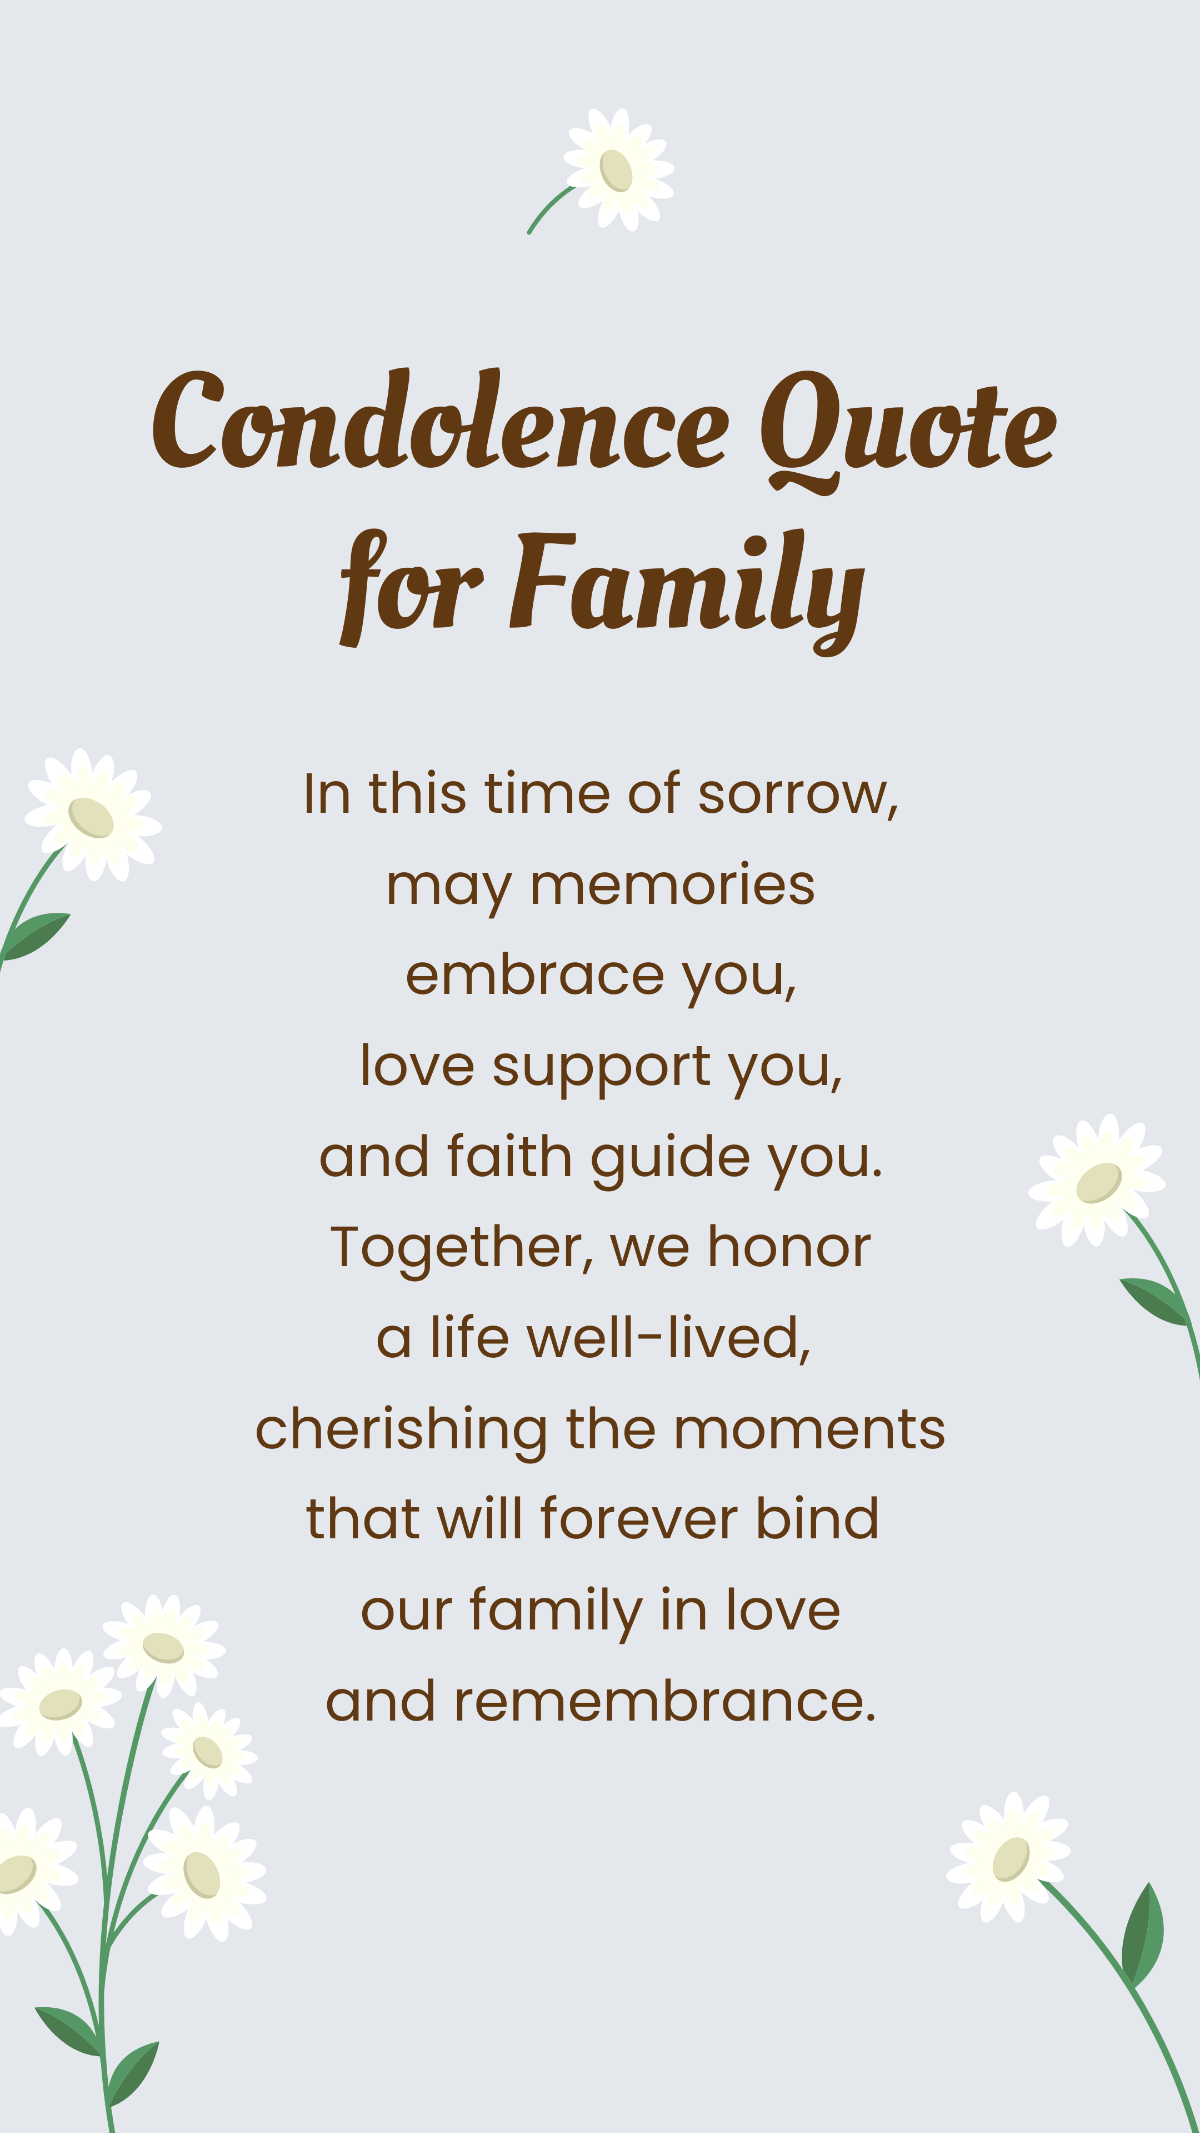 Condolence Quote For Family